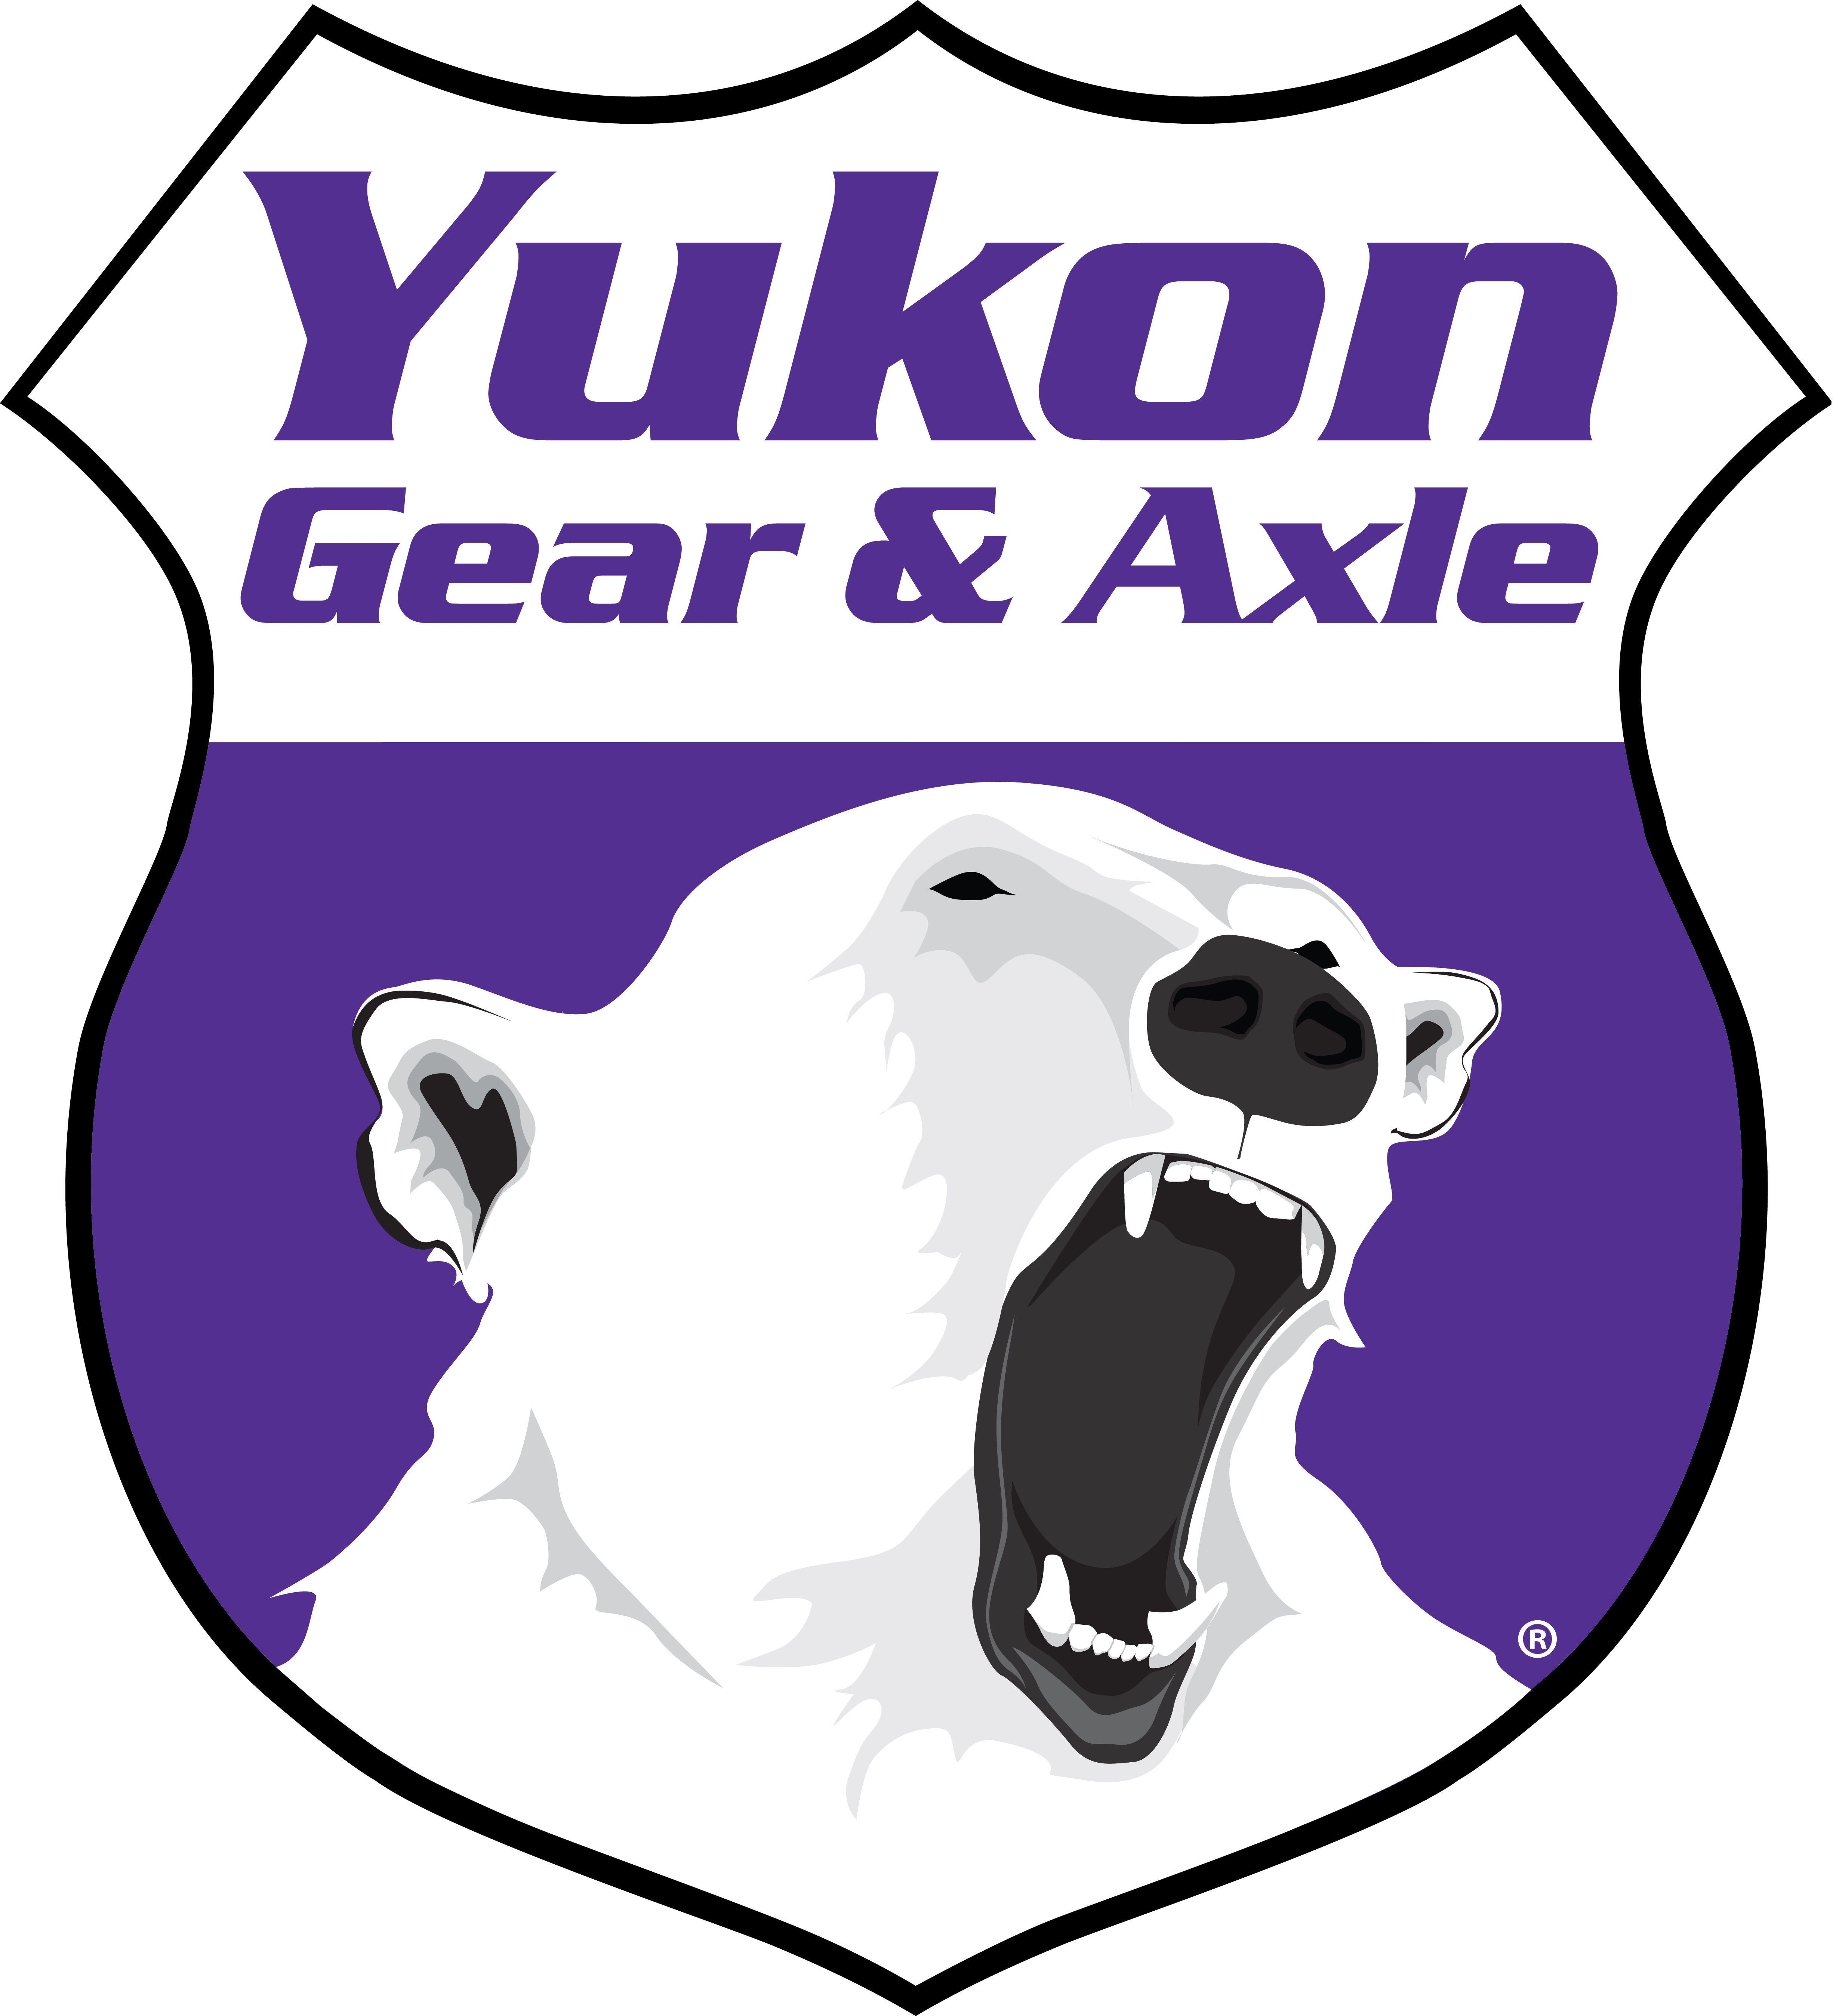 Yukon high performance ring & pinion set, Dana 60, reverse rotation, 4.56 thick 